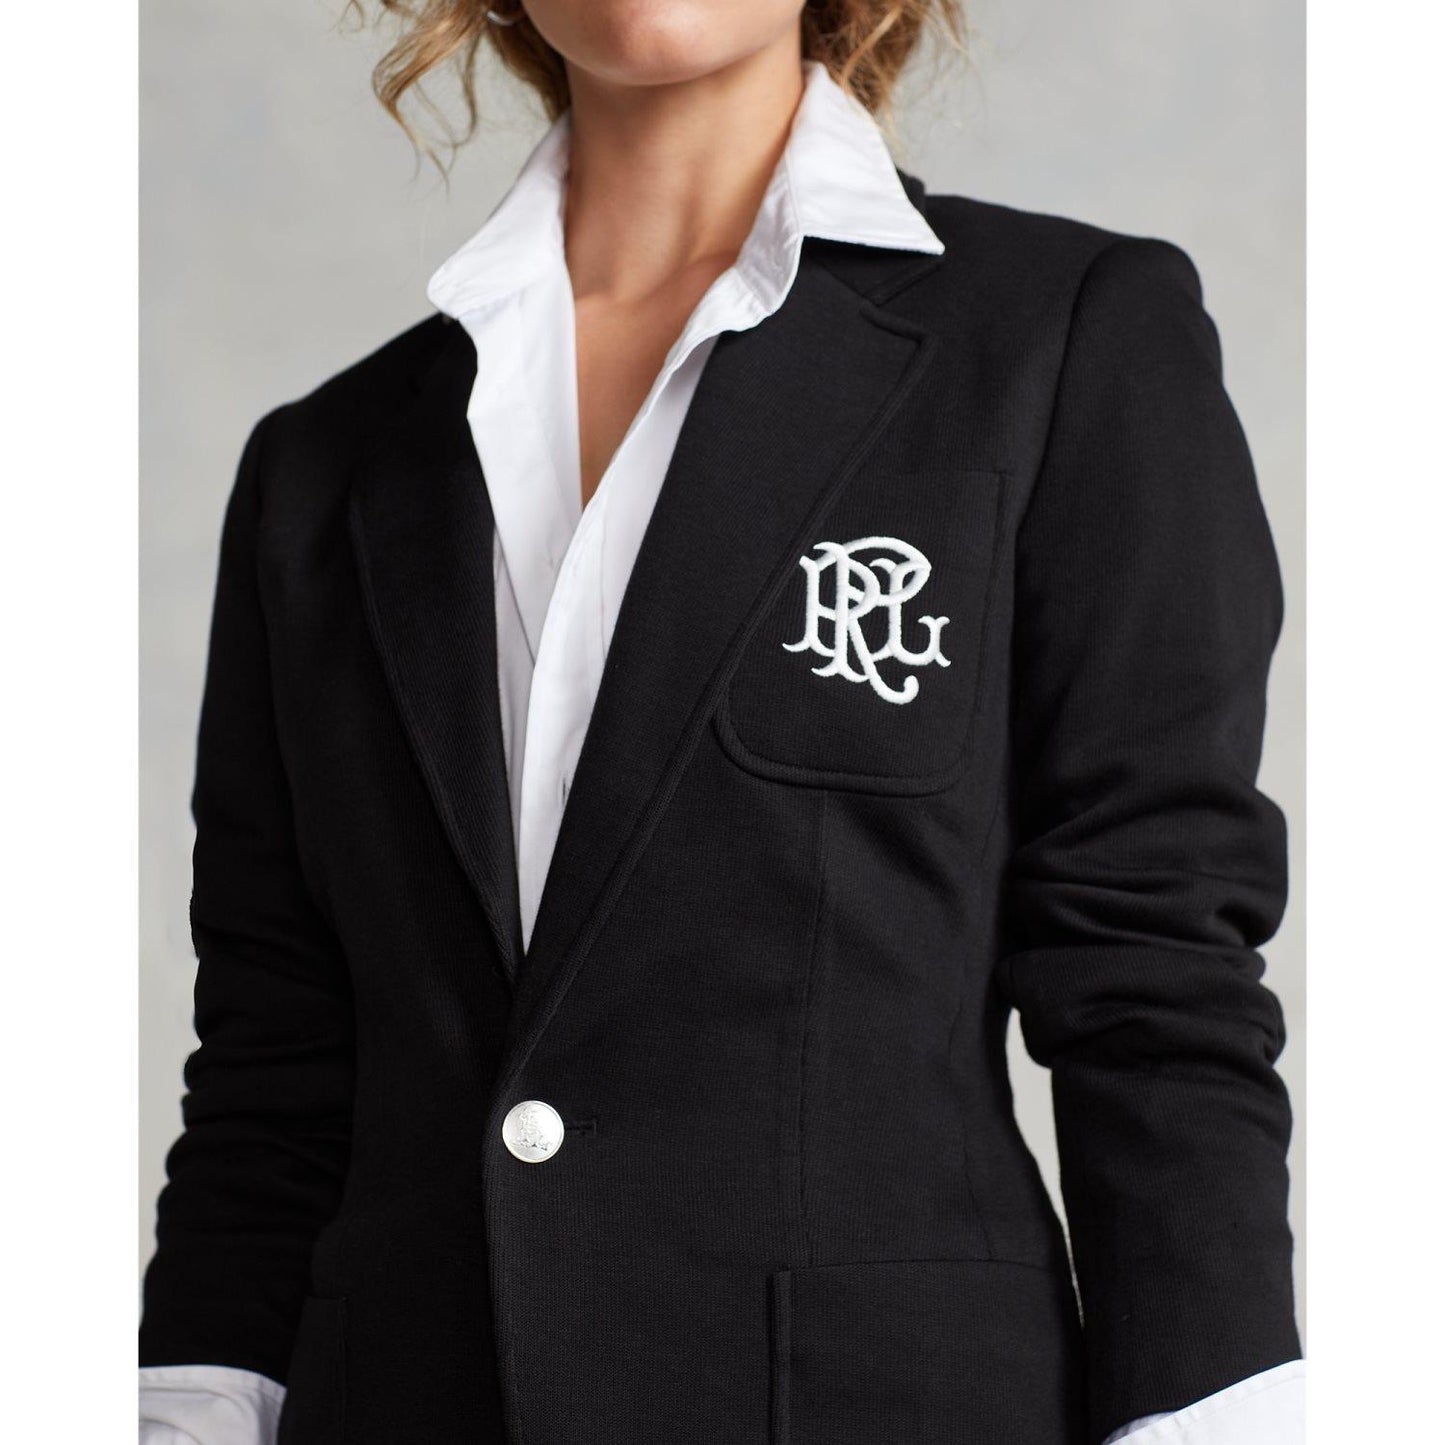 Polo Ralph Lauren Double-Knit Jacquard Blazer Sort